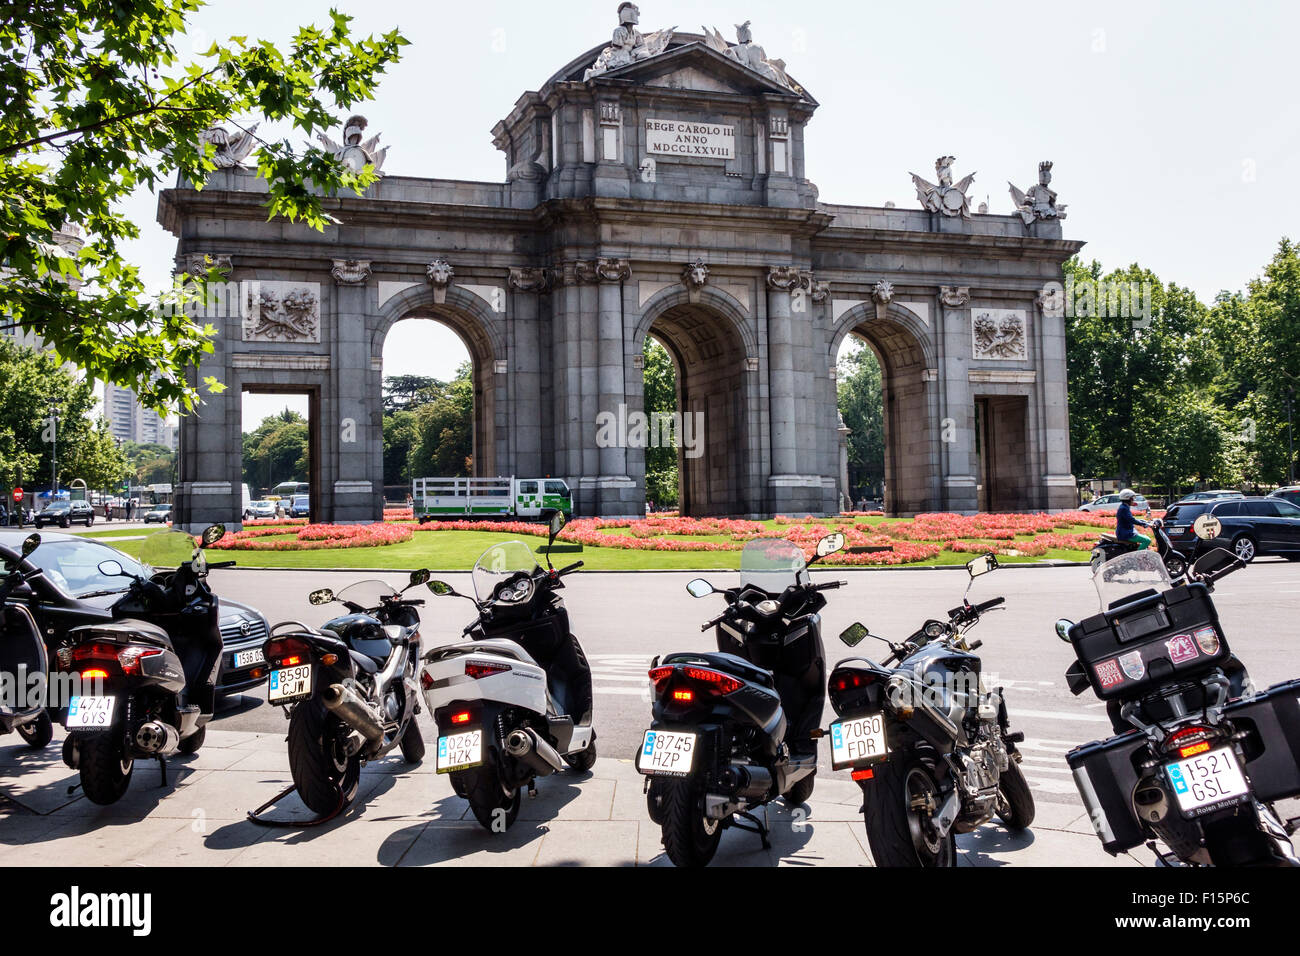 Madrid Spain,Hispanic Salamanca,Recoletos,Plaza de la Independencia,Puerta de Alcala,monument,motorcycles,motor scooters,parked,Spain150629010 Stock Photo